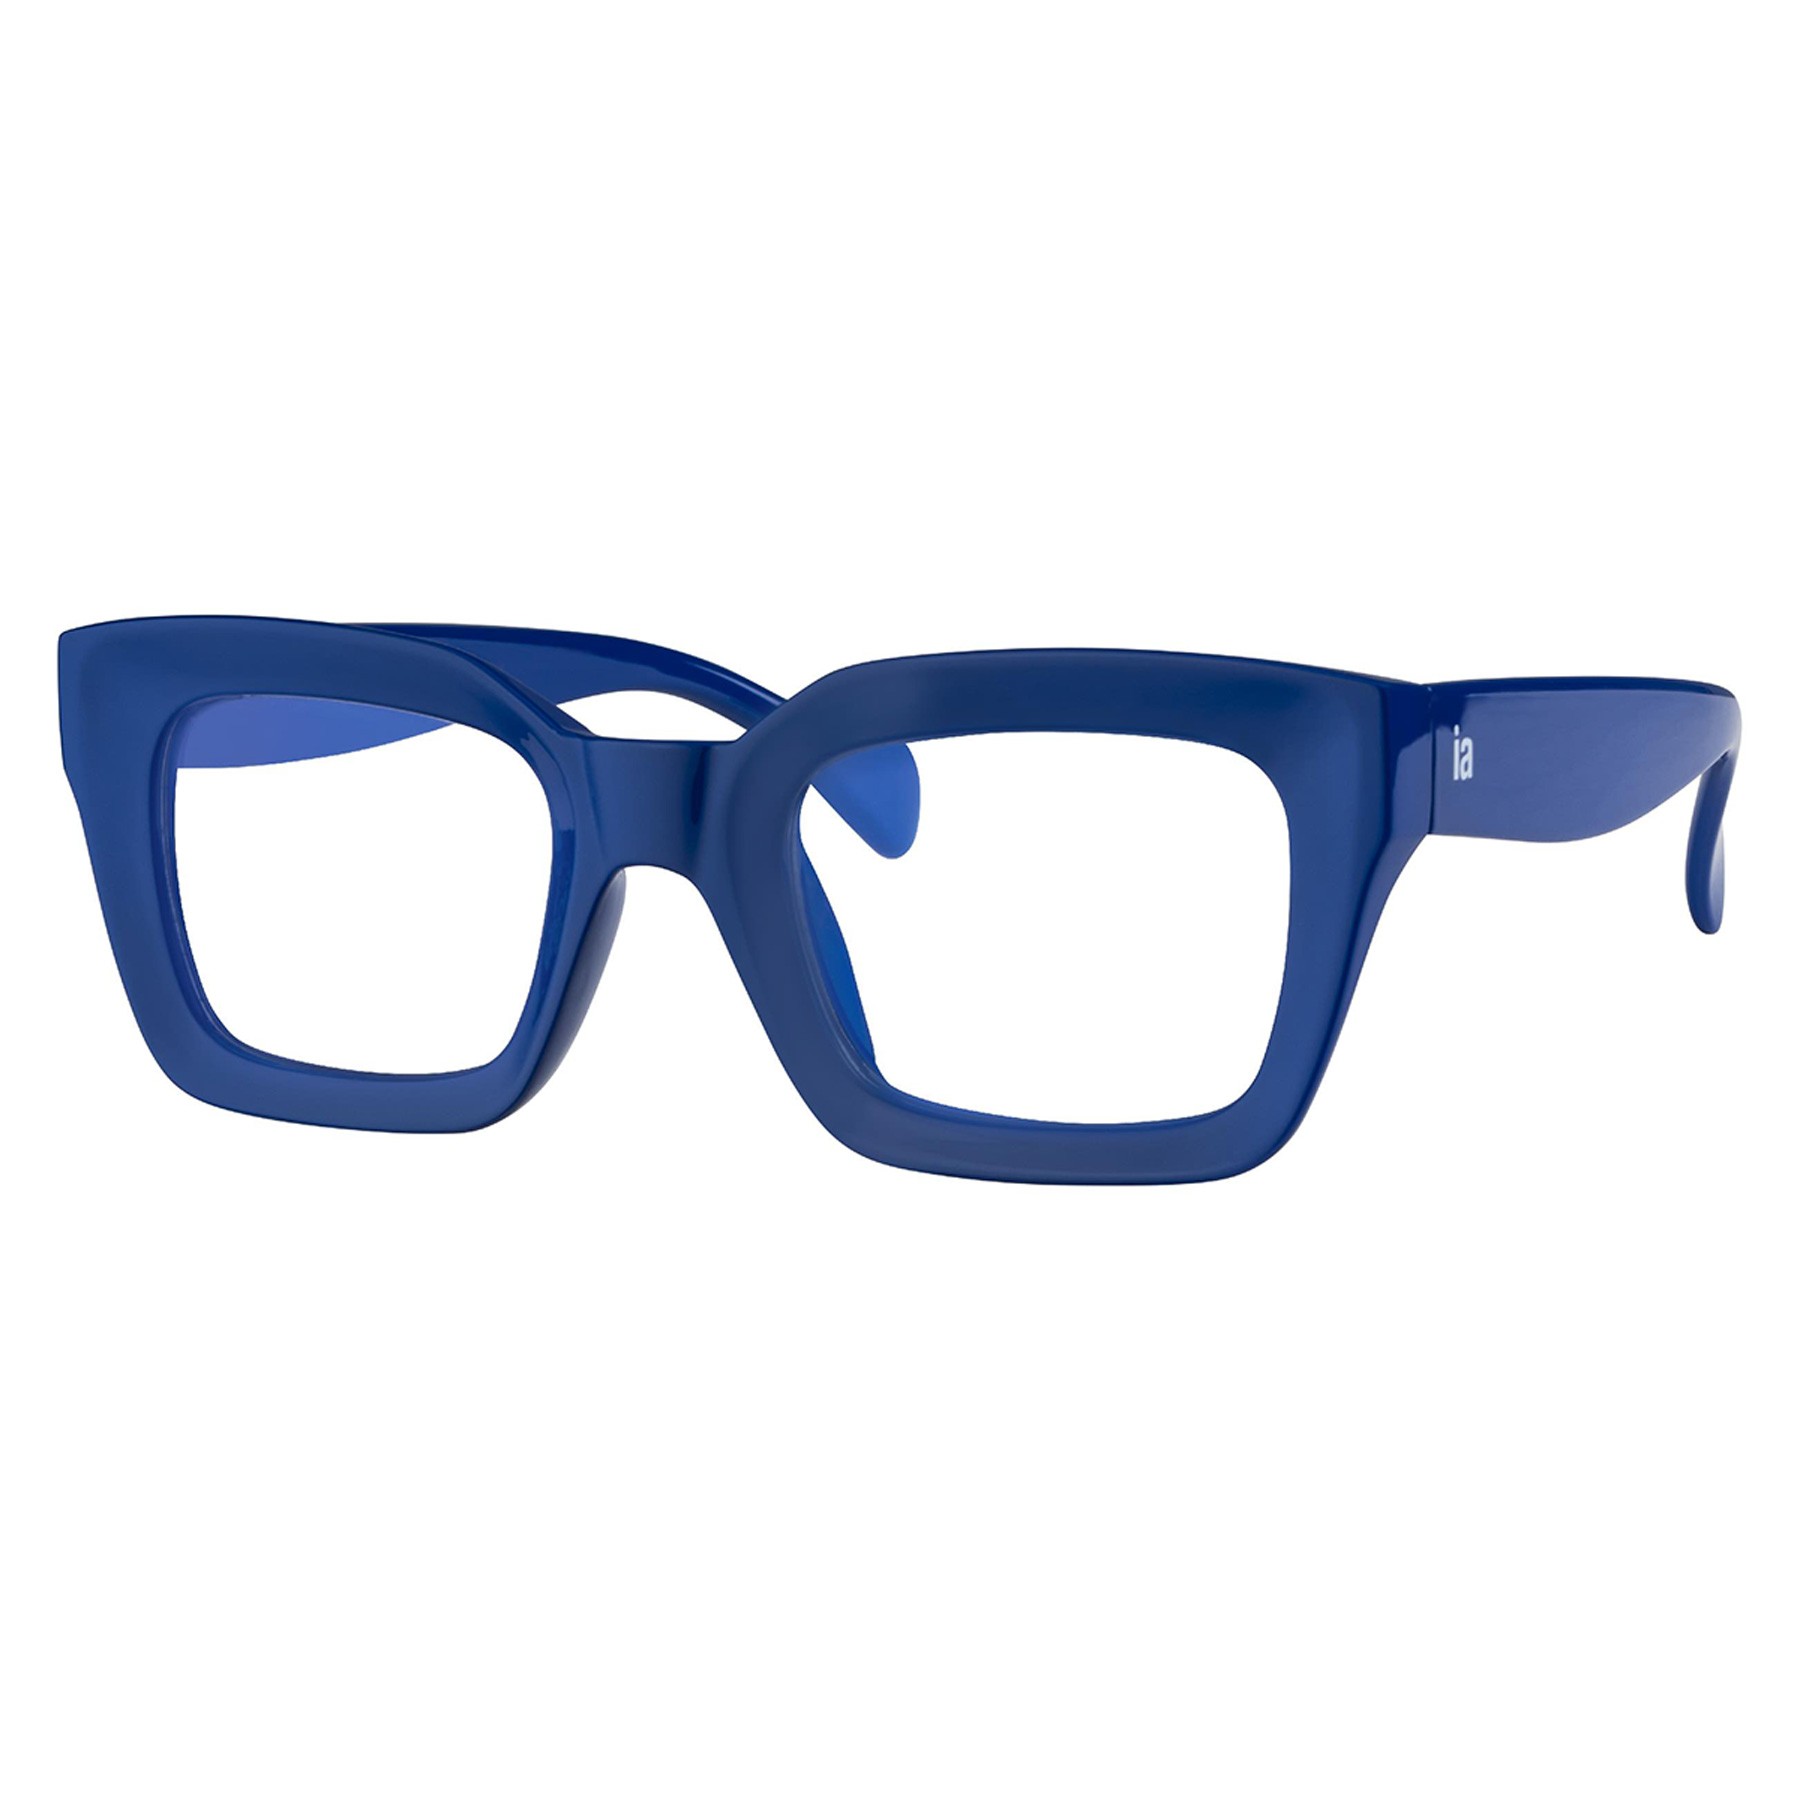 Iaview gafa de presbicia BRERA azul +1,50